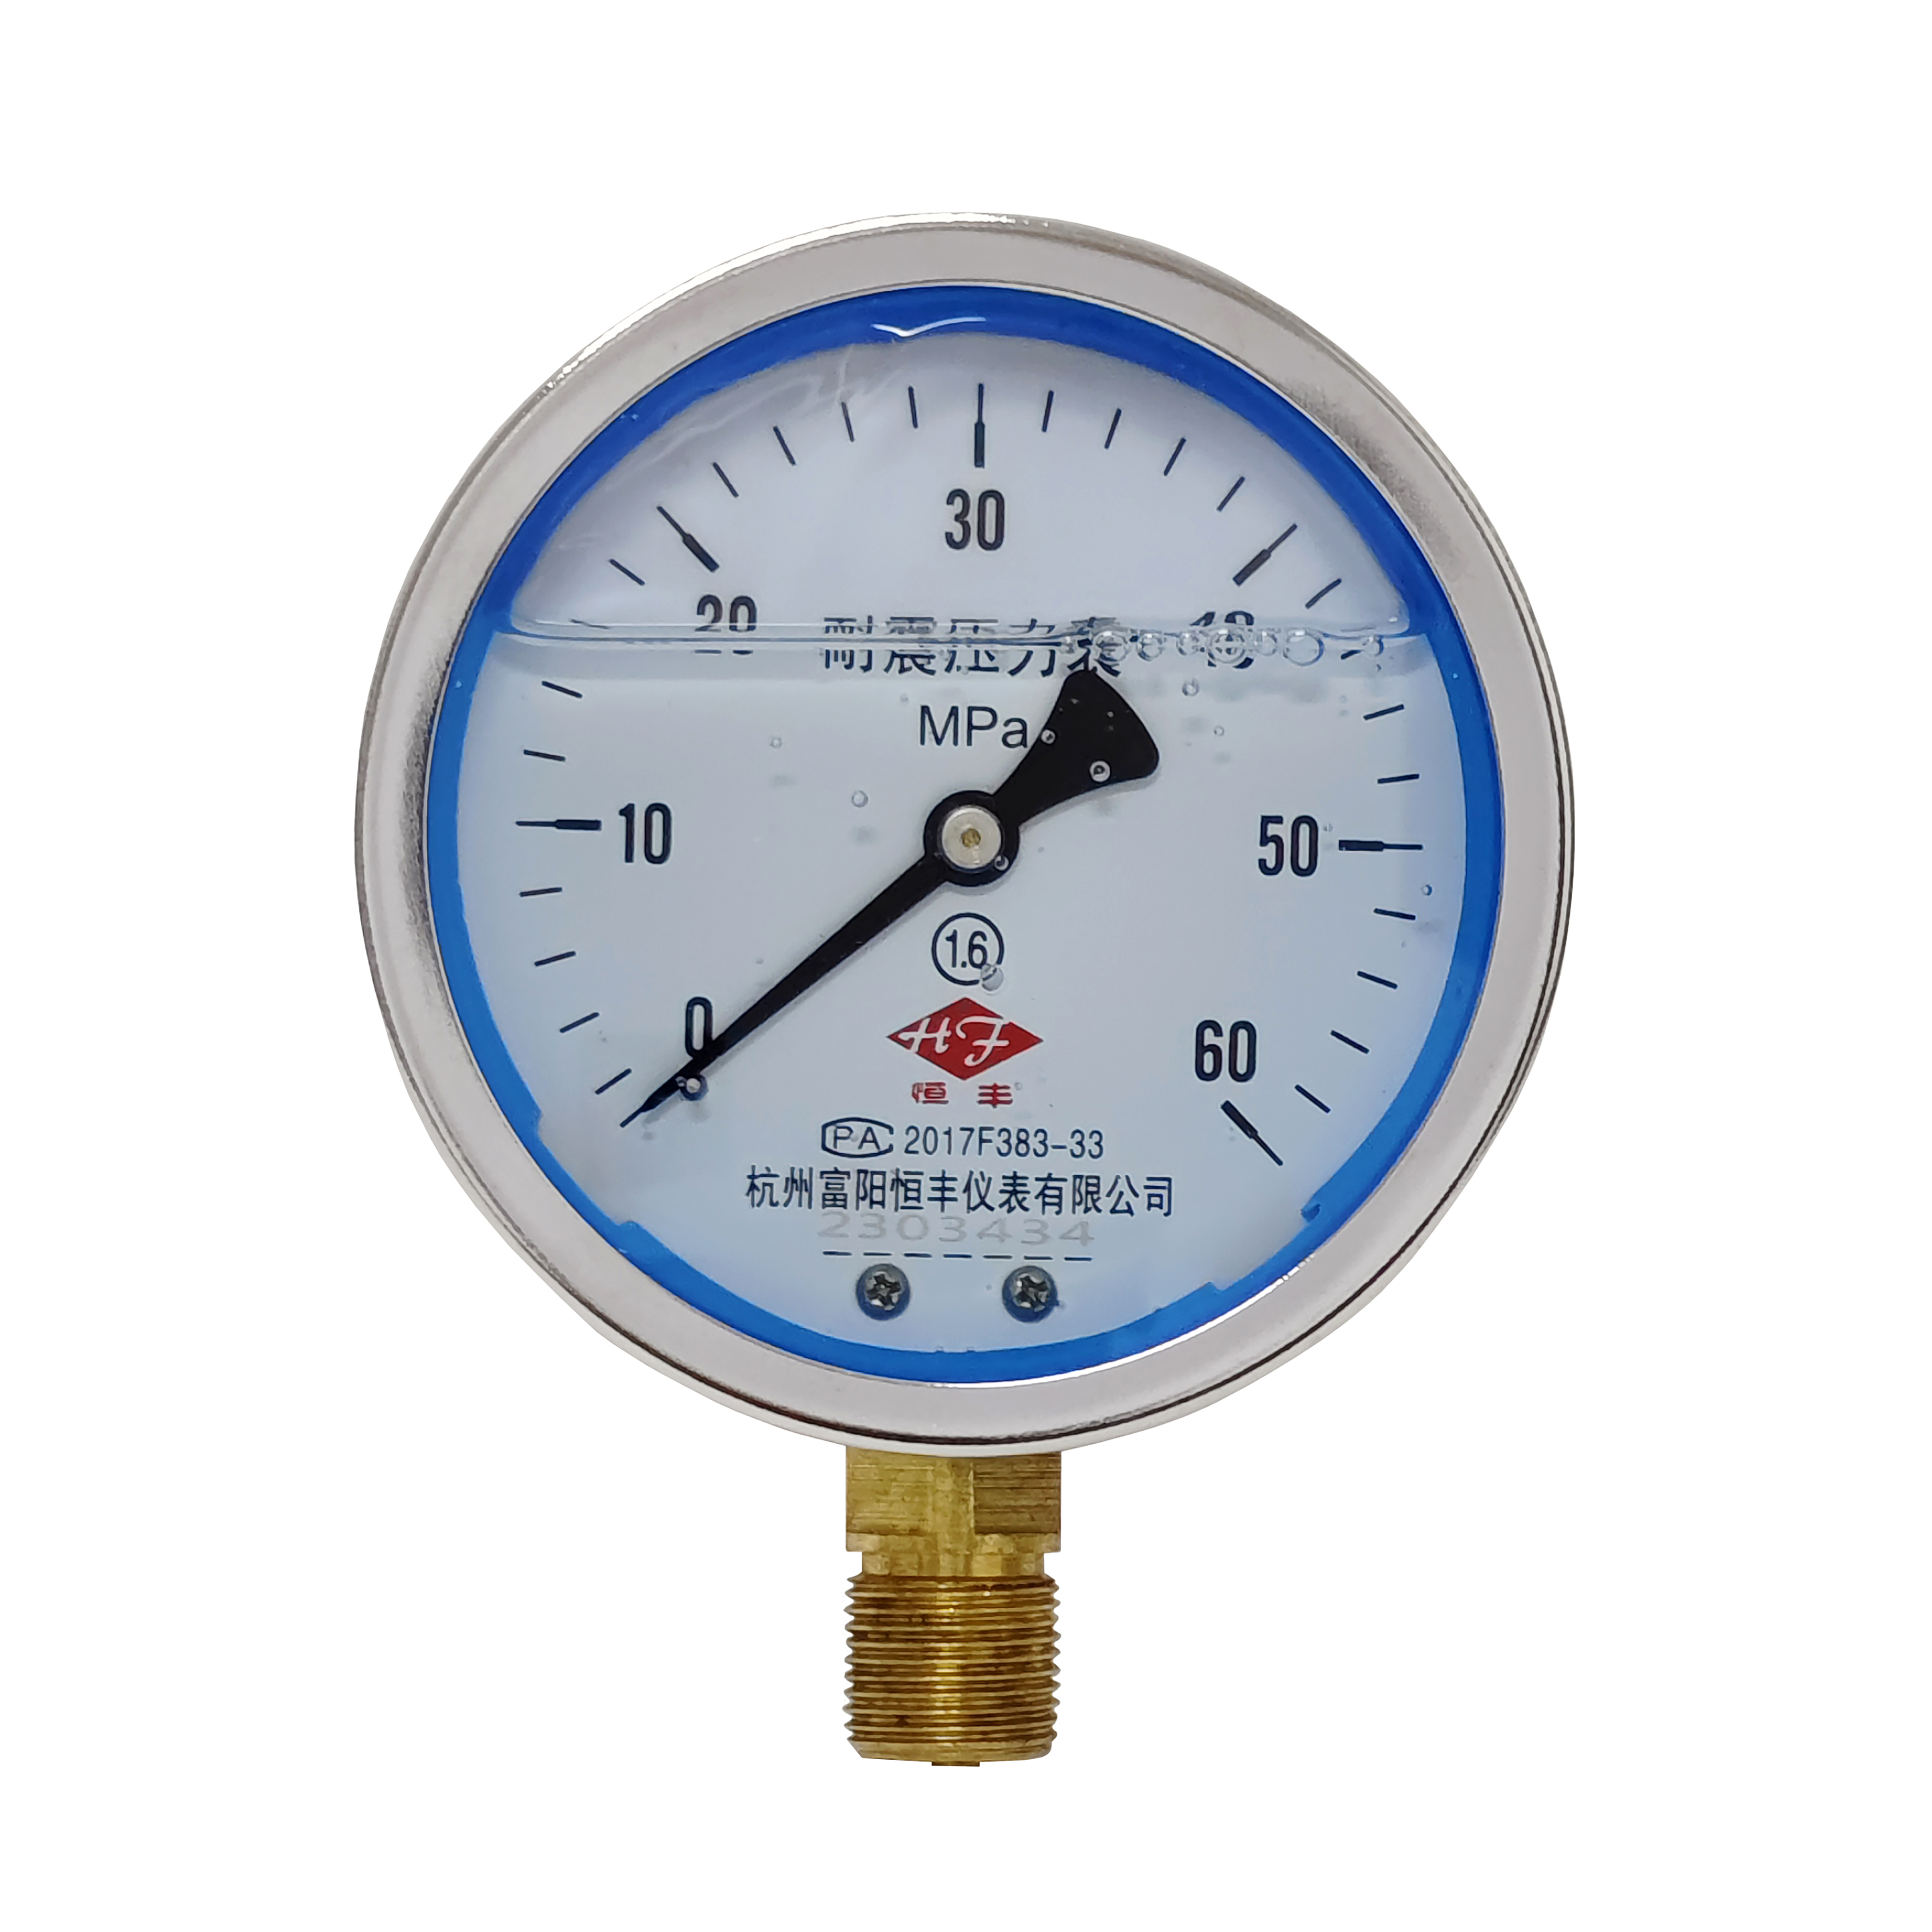 YN100 shock-proof pressure gauge